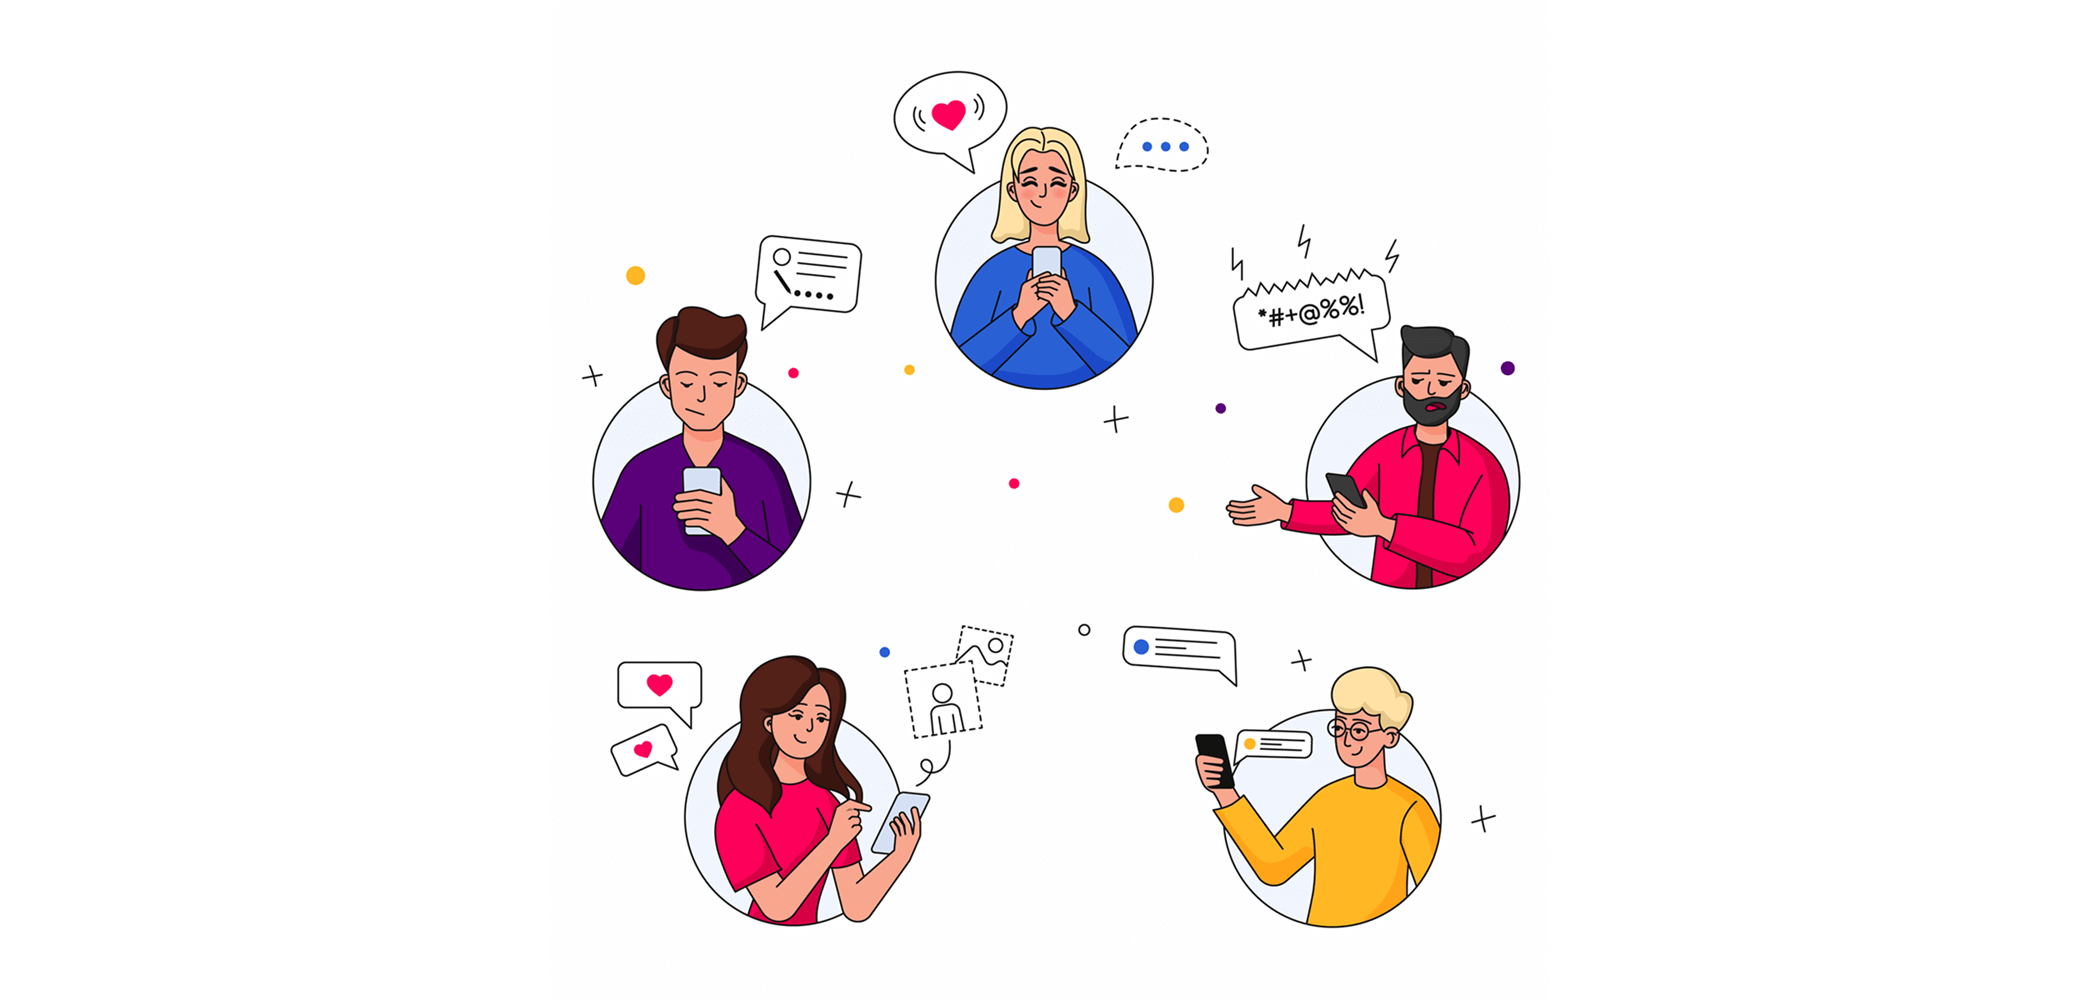 Illustration of cartoonish people communicating on their phones.